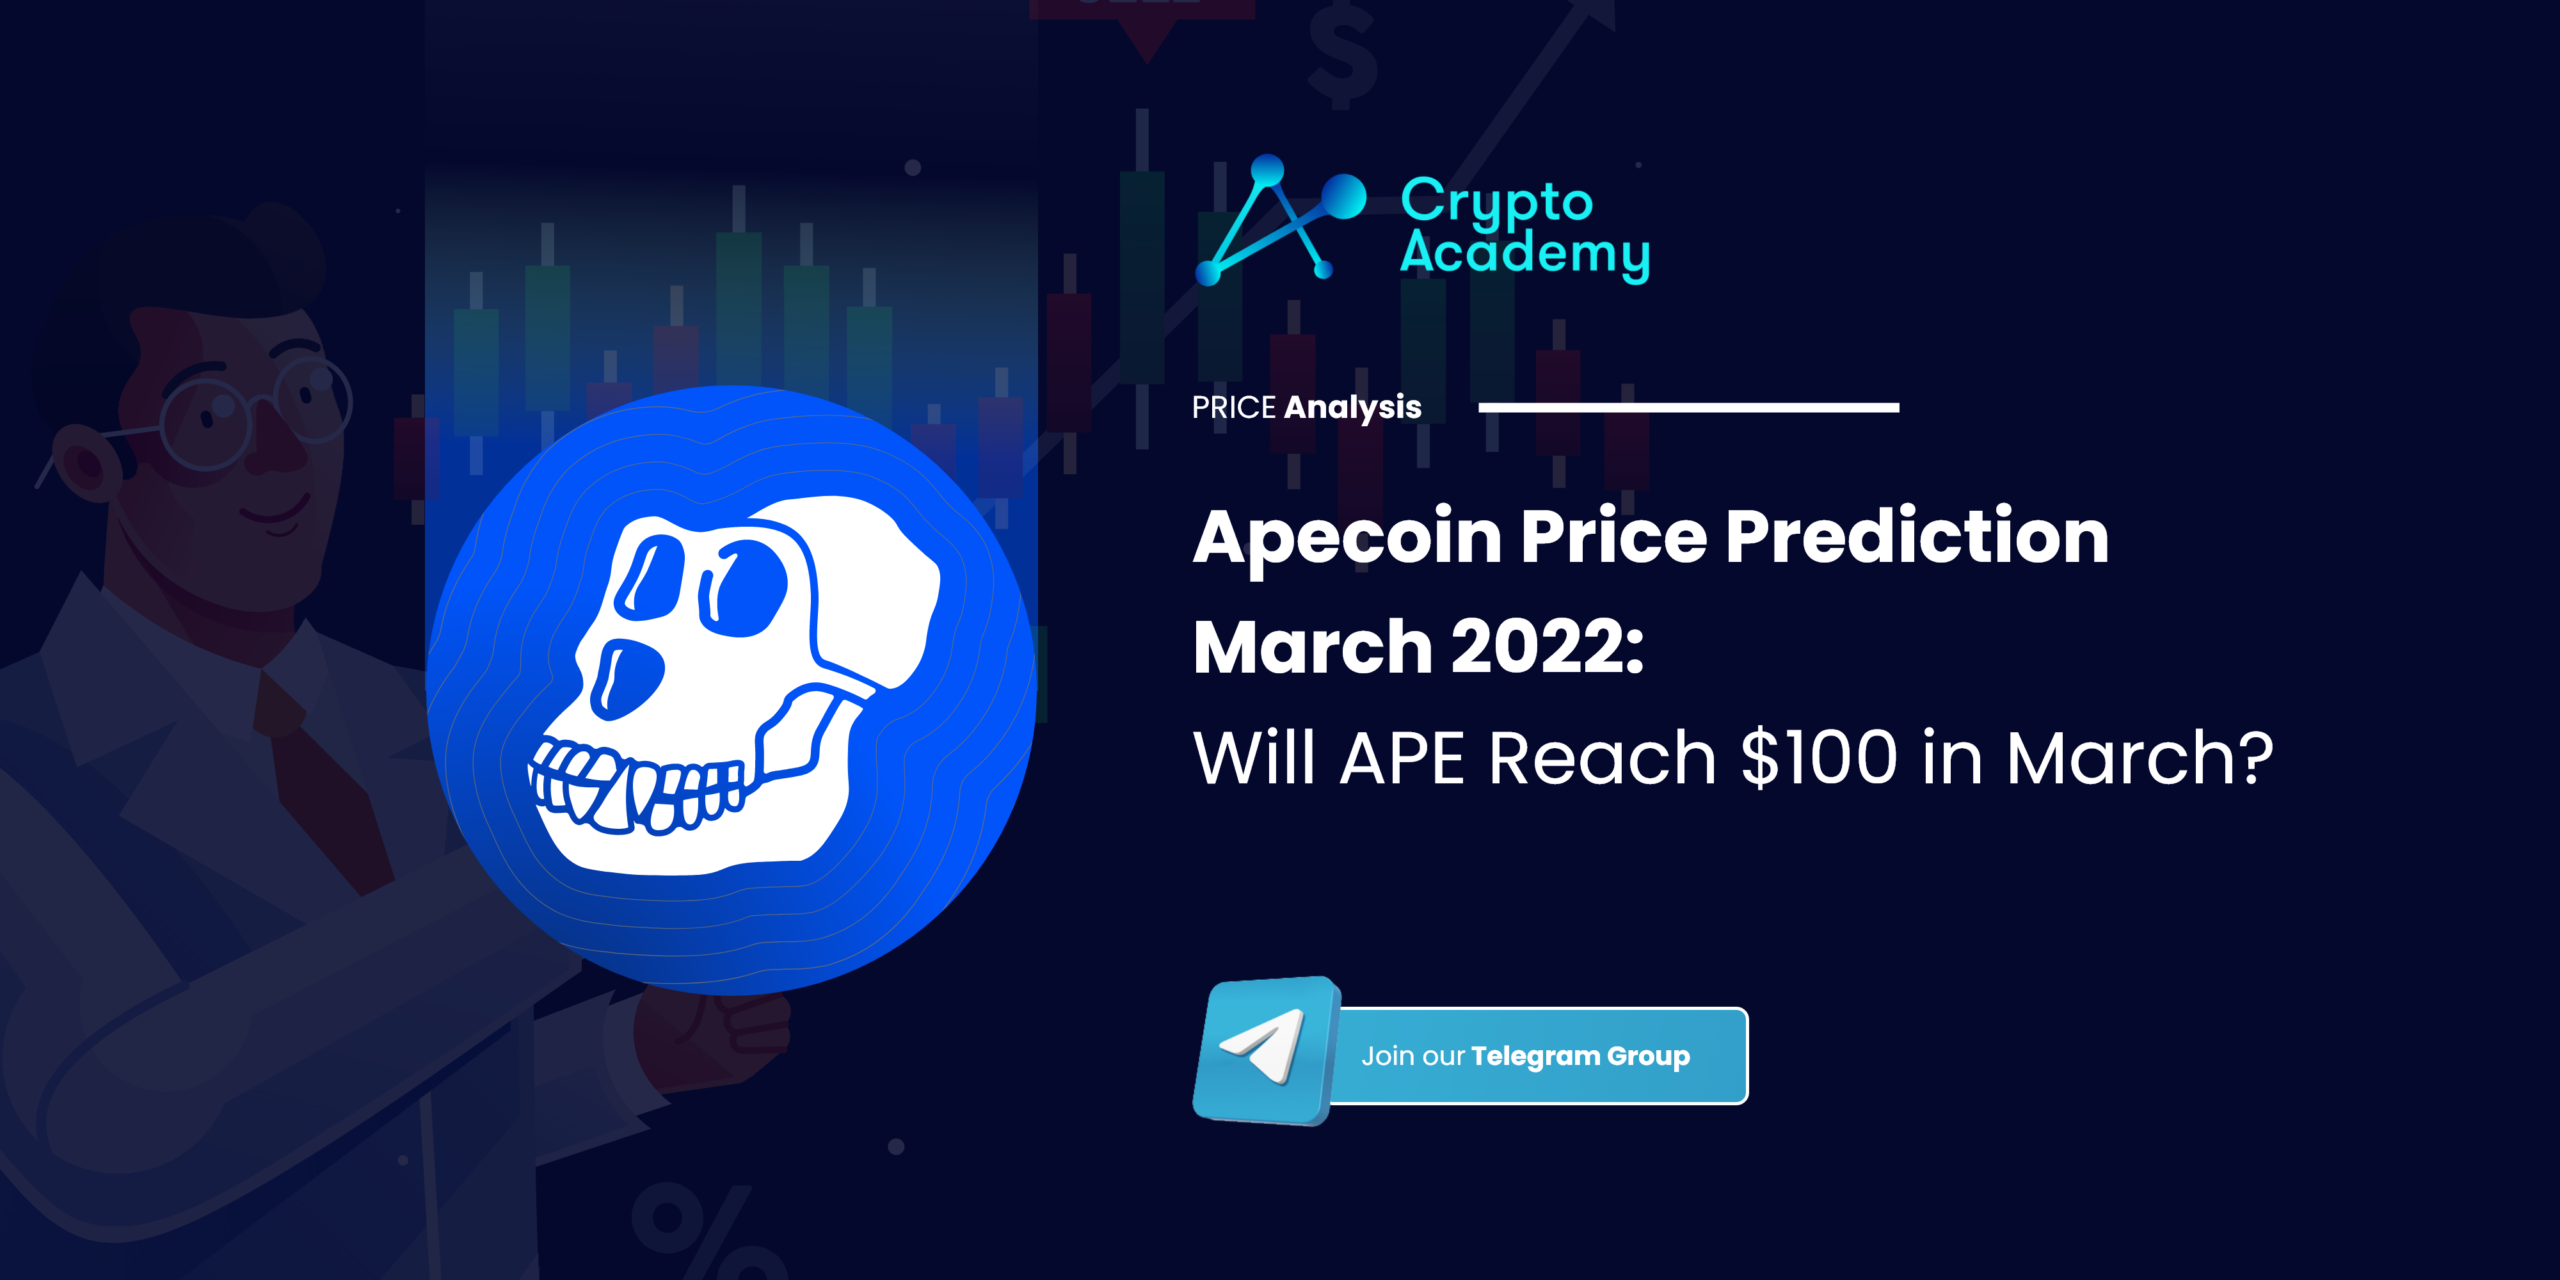 Apecoin Price Prediction March 2022: Will APE Reach $100 in March?